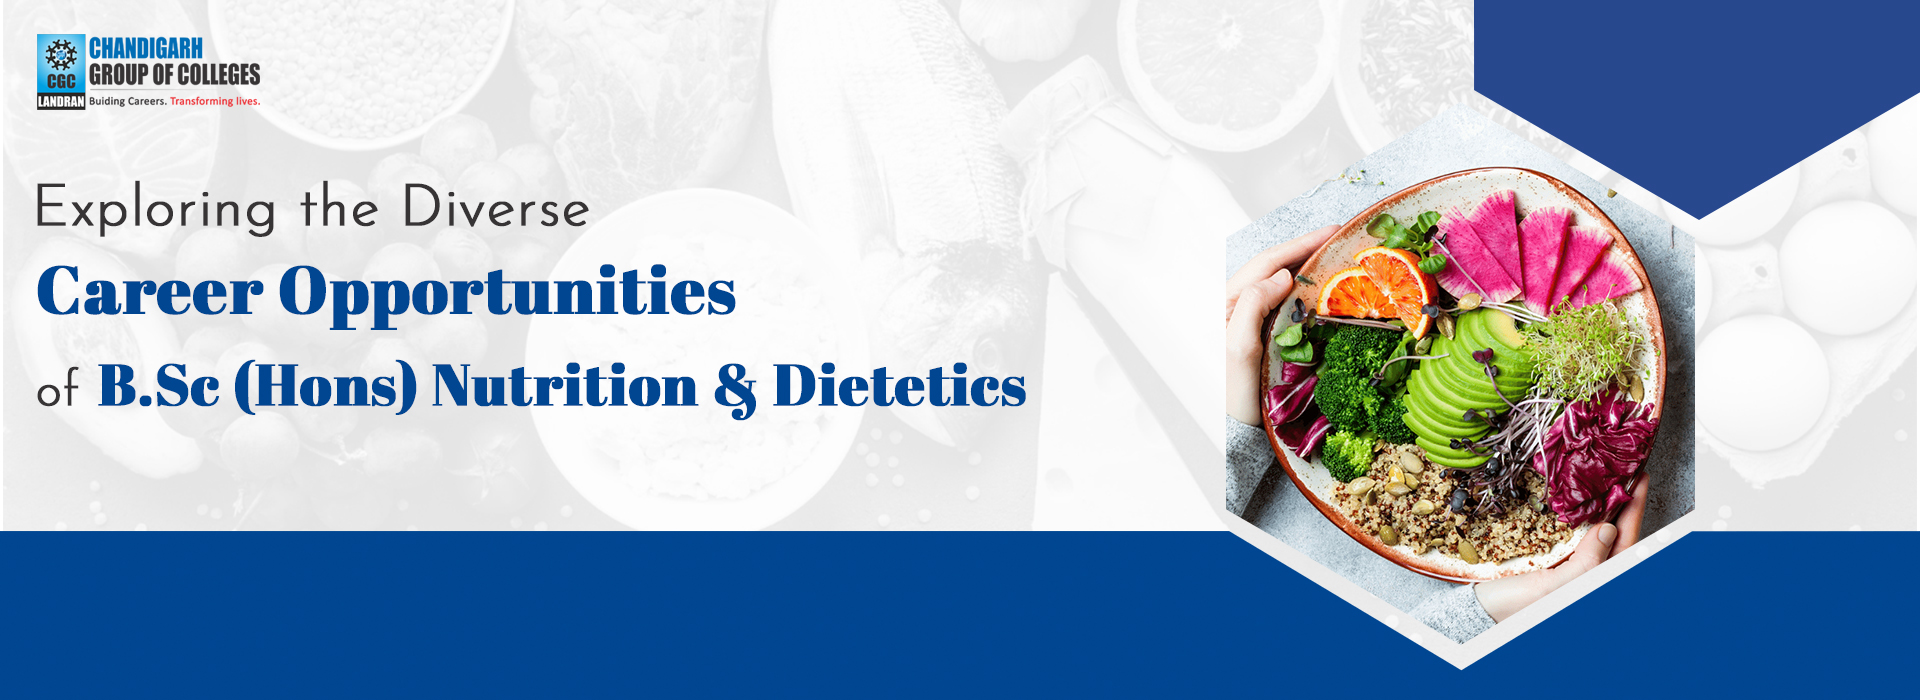 Exploring the Diverse Career Opportunities of B.Sc (Hons) Nutrition & Dietetics 